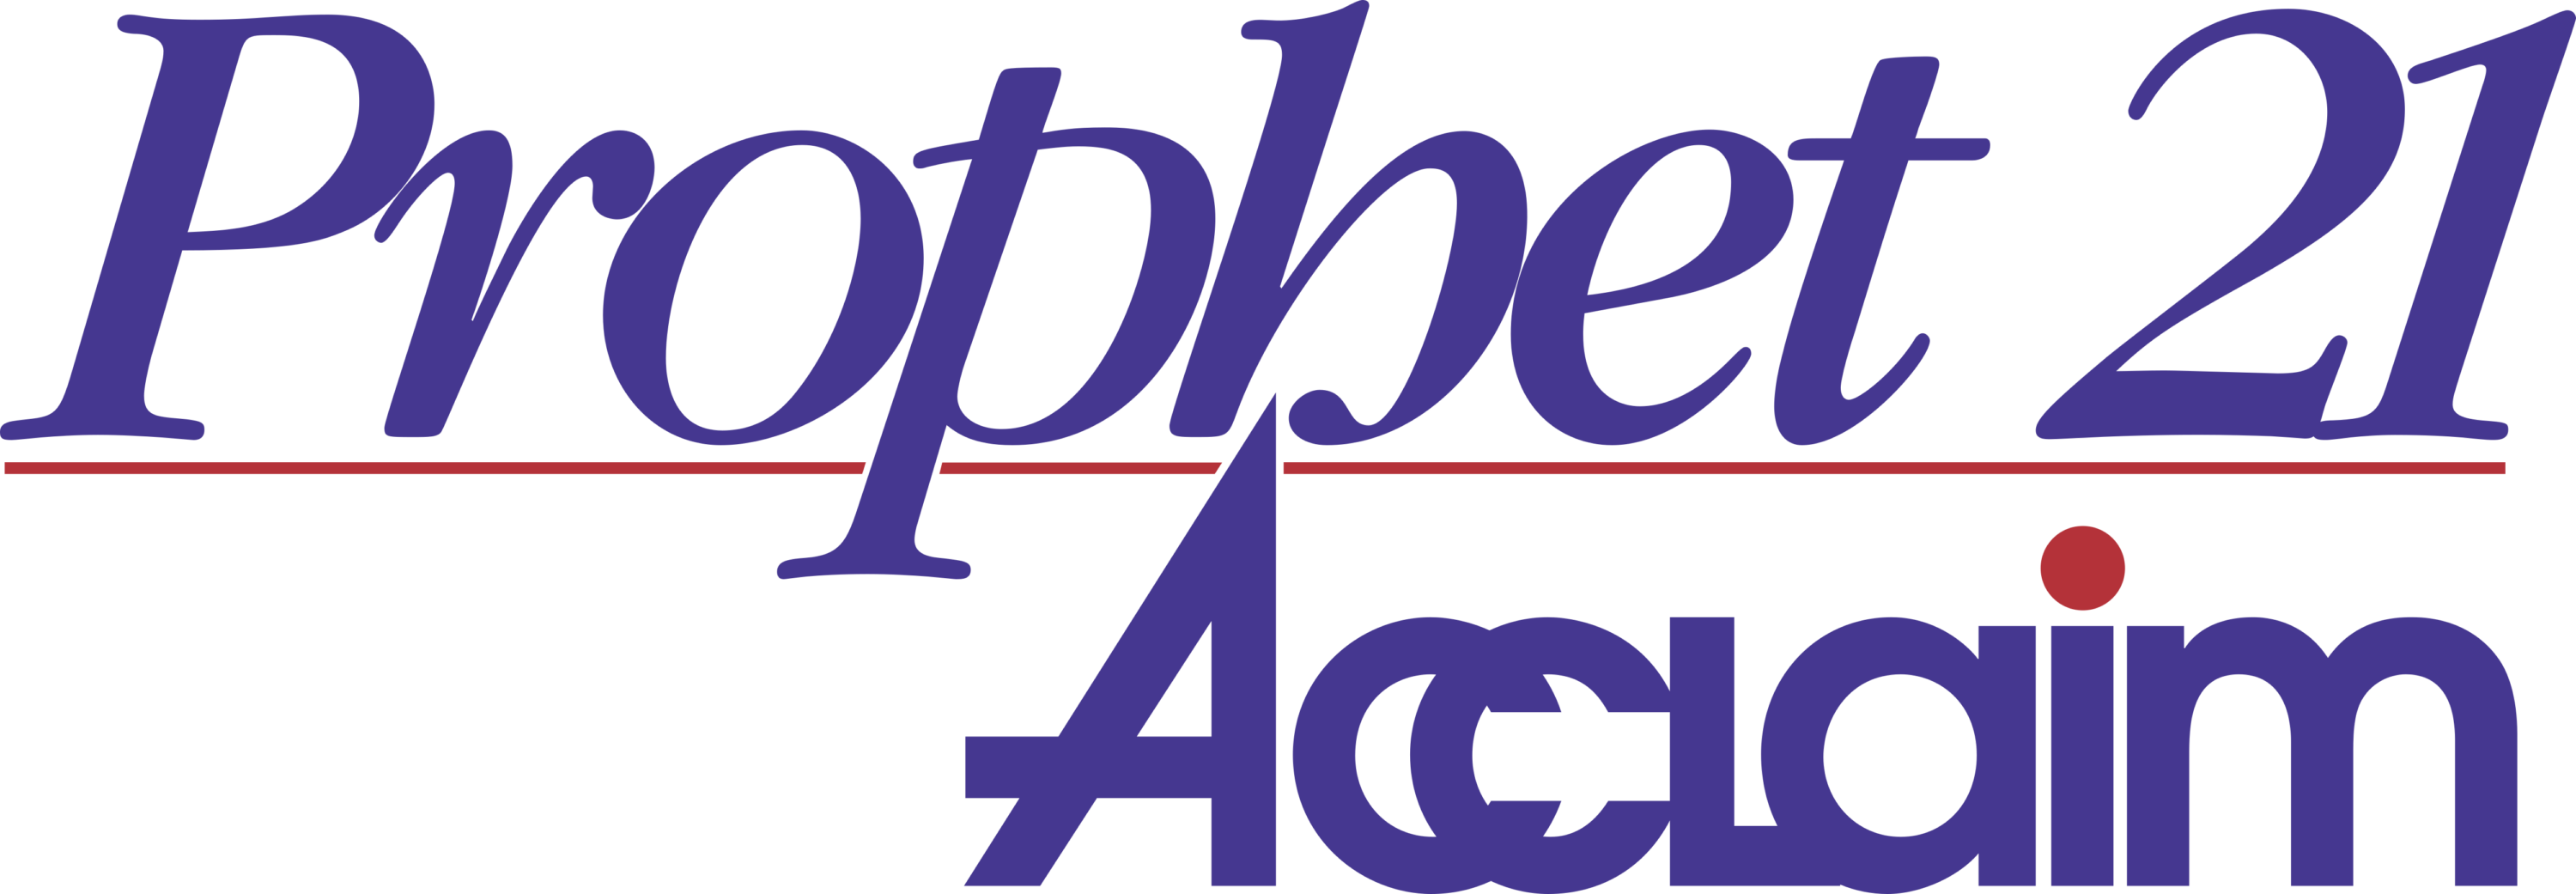 Prophet 21 Logo acclaim